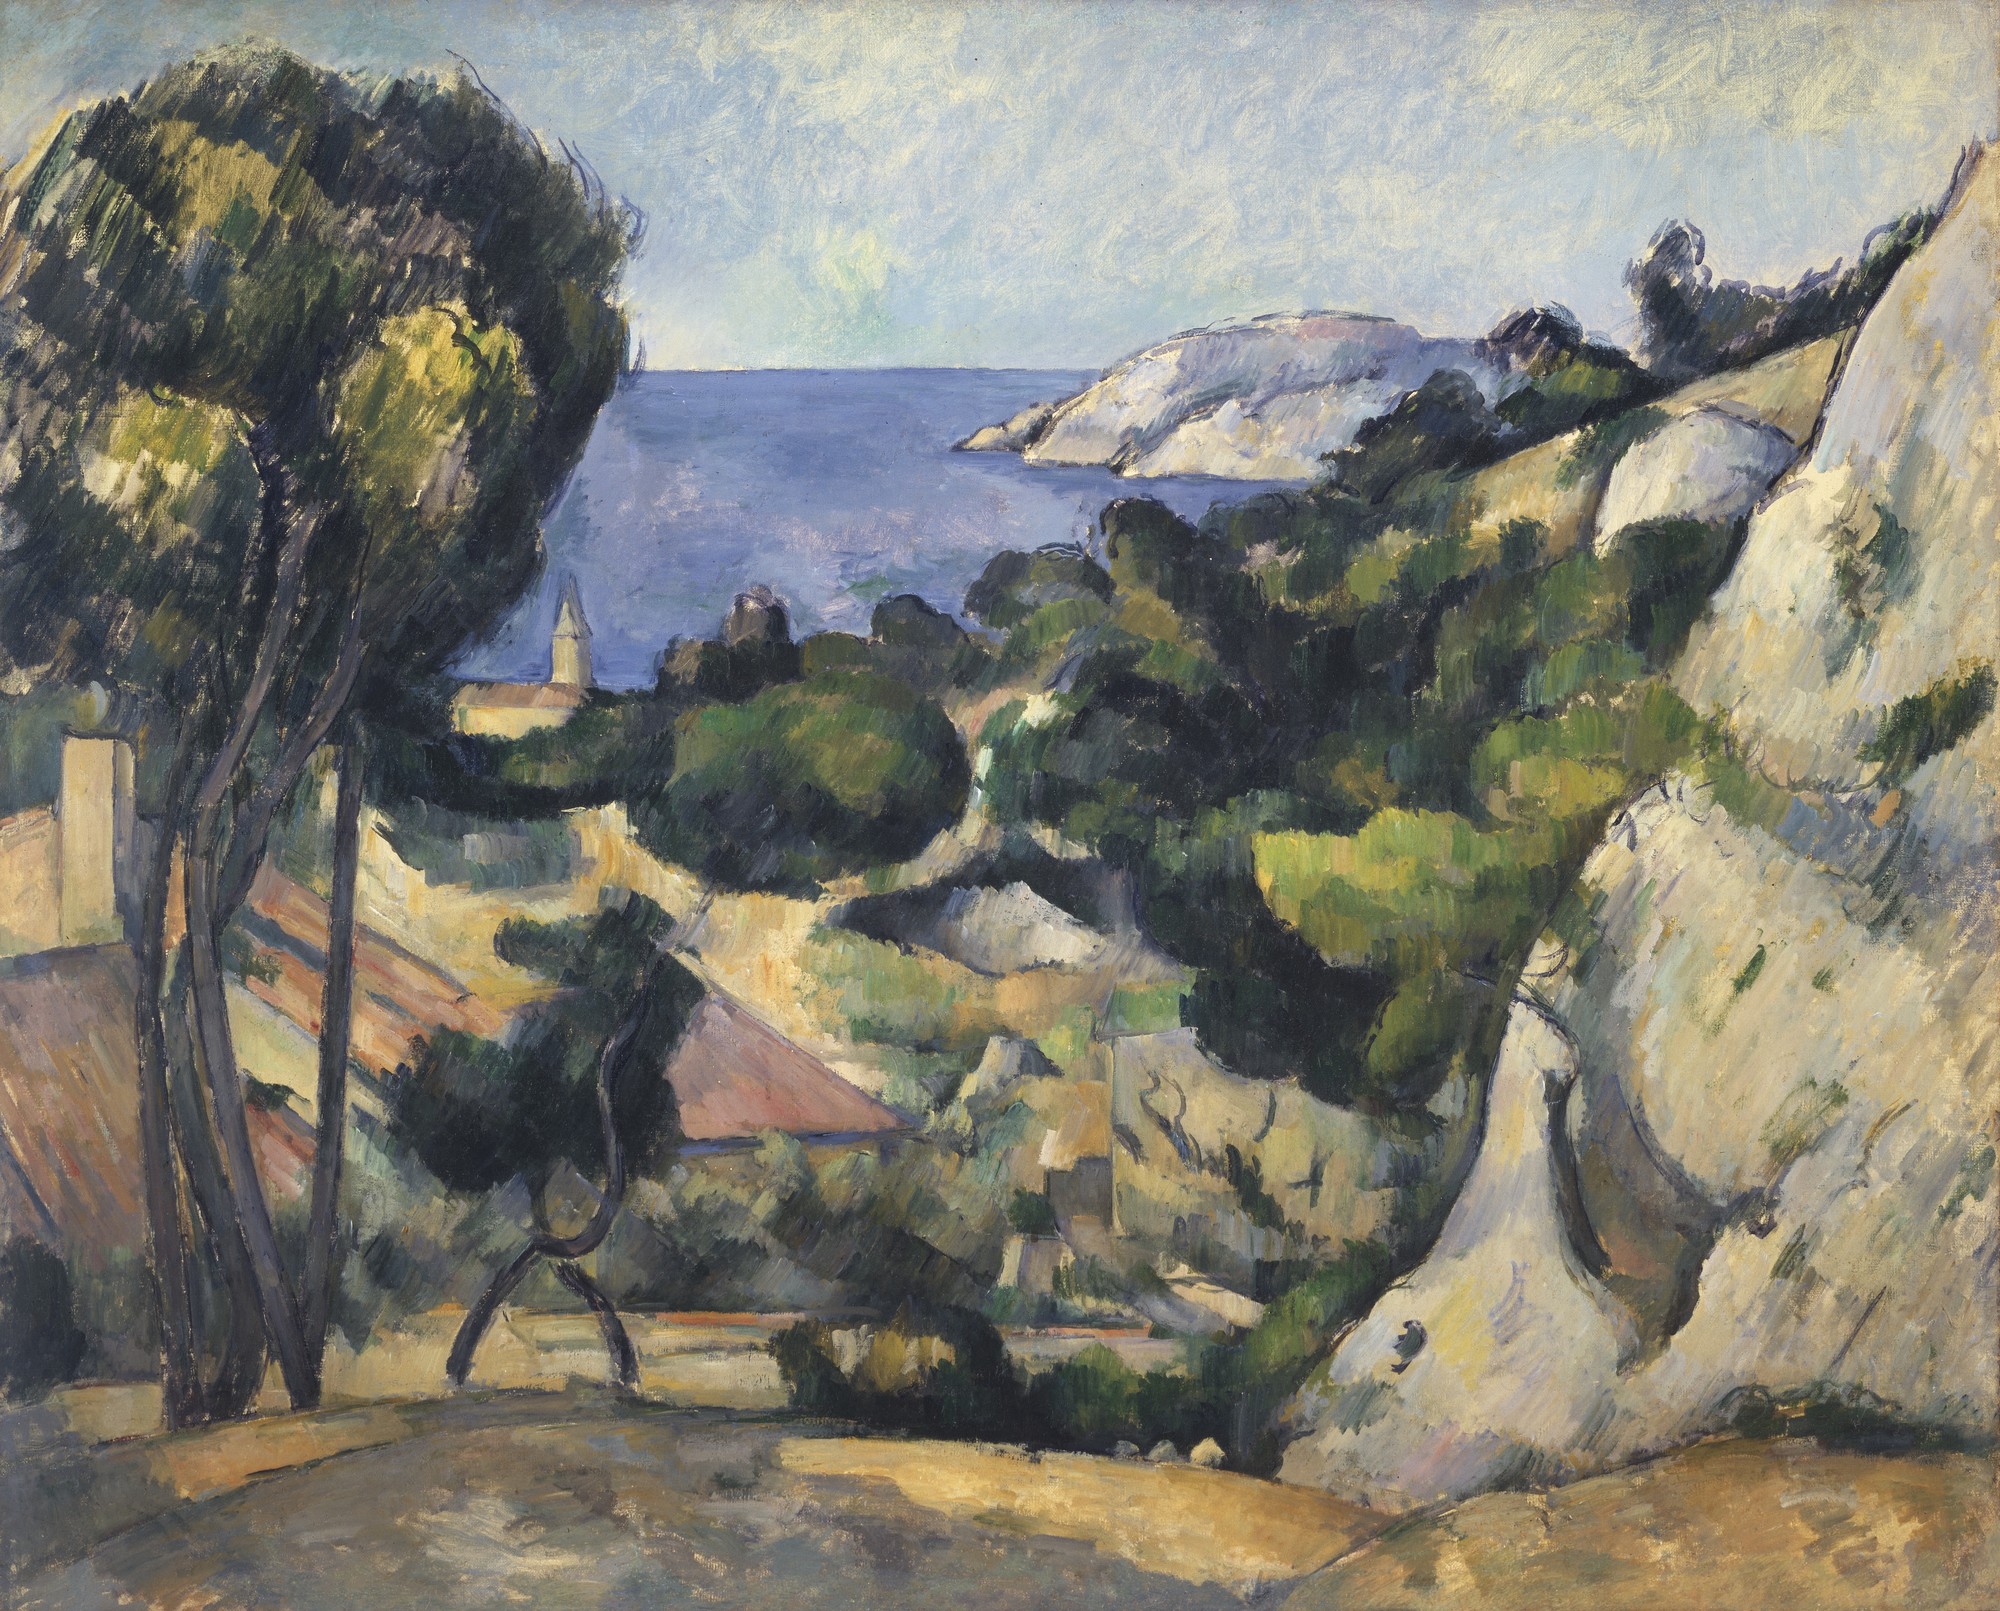 Peintre géologue: Cézanne at Princeton